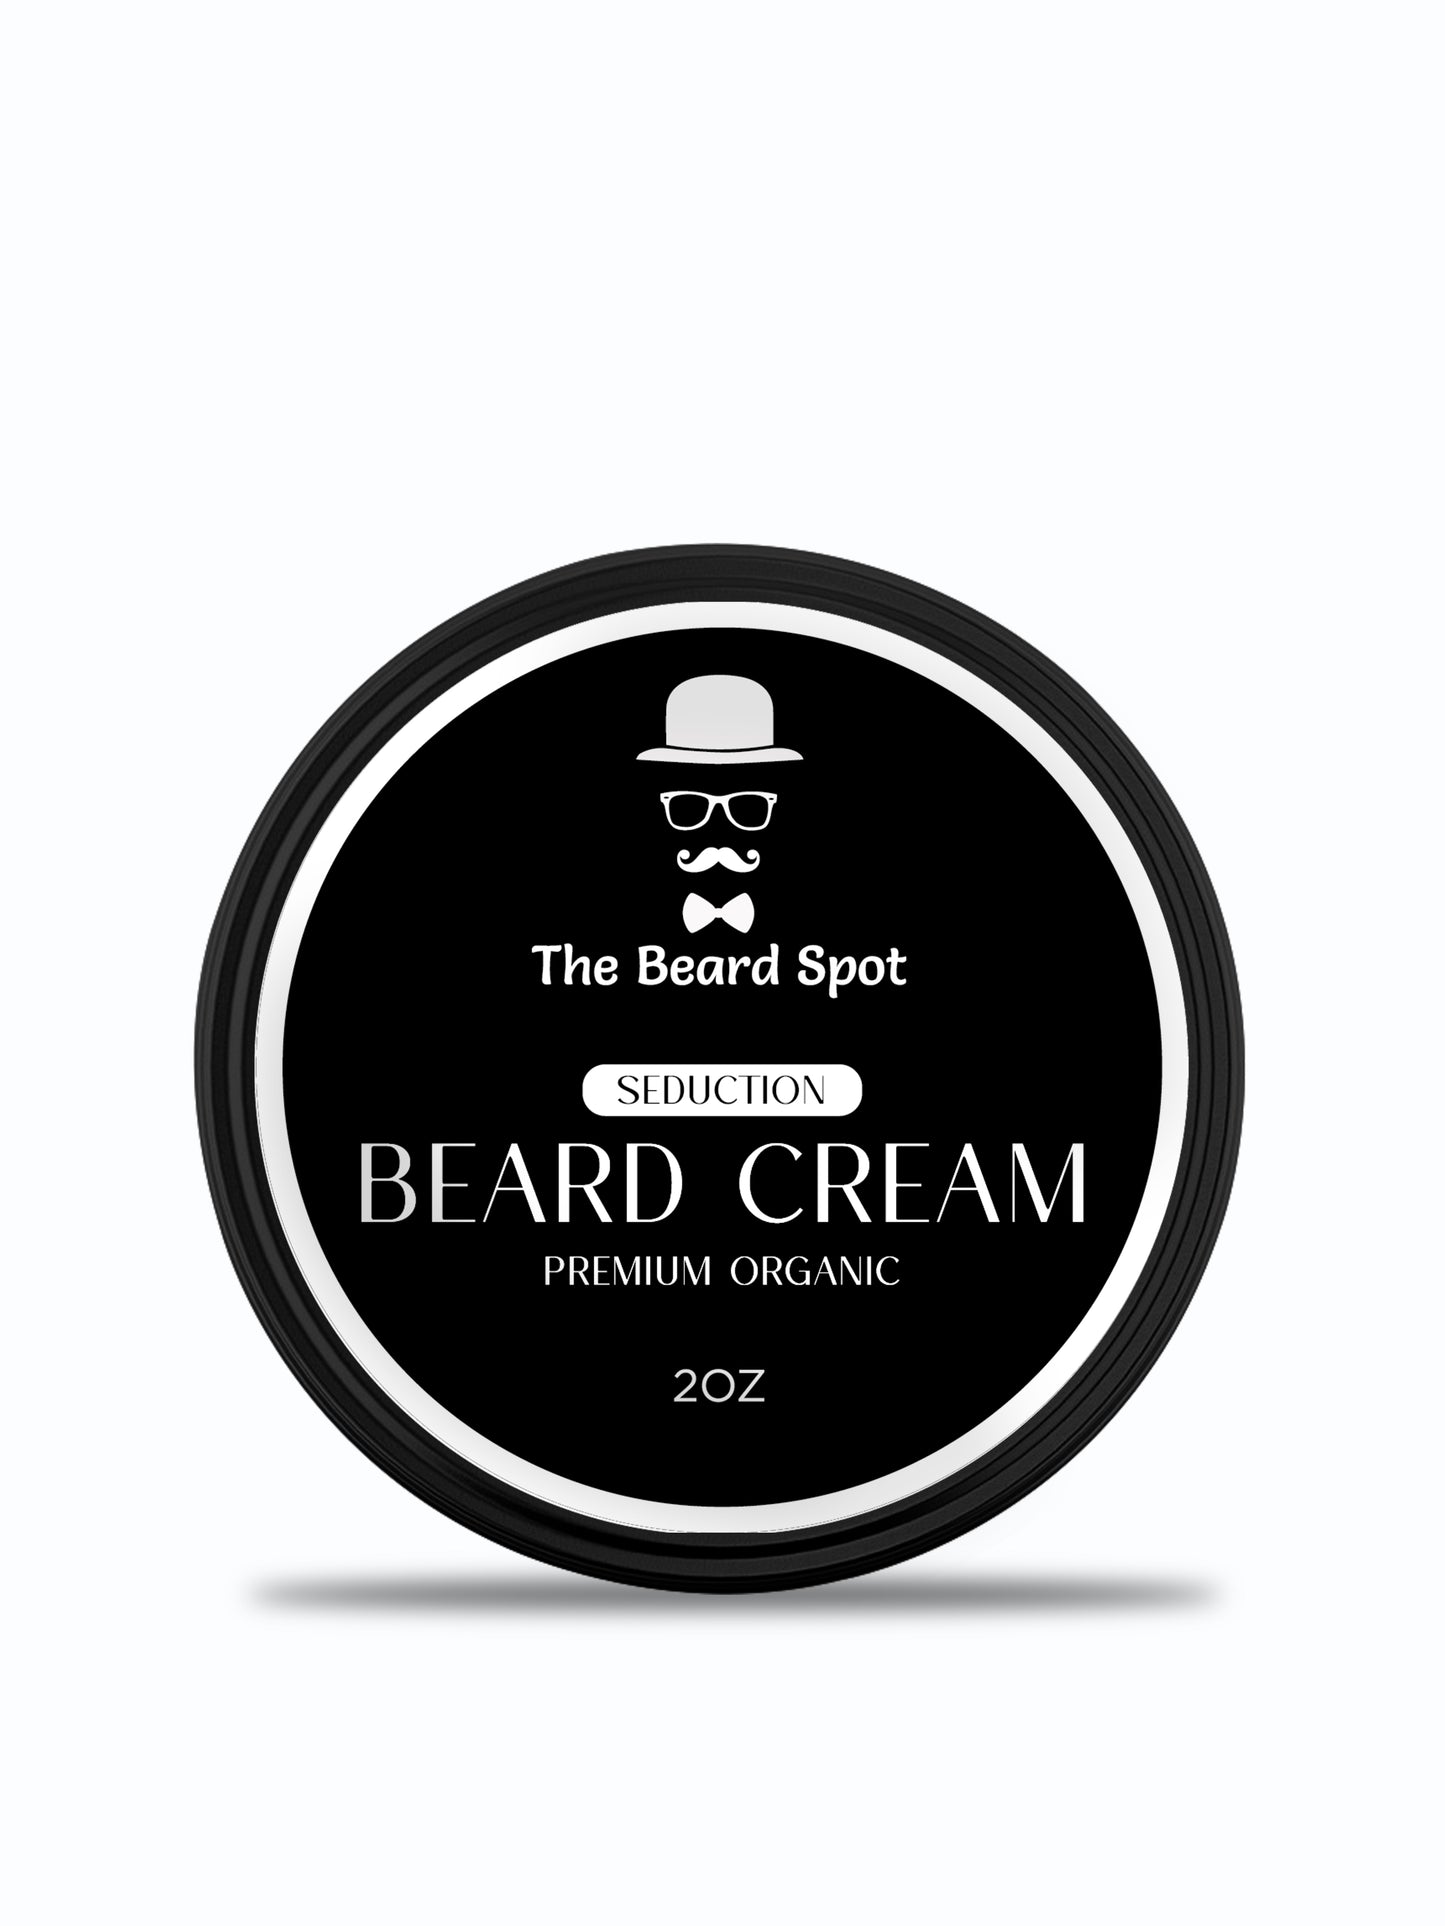 Beard Oil, Beard cream, Beard Balm, Organic Beard Oil, Organic Beard Balm, Organic Beard Cream, Beard Growth, Beard care, Grow beard, Beard grooming kits, Beard kit, Beard oil scents, Best beard products, Beard maintenance, Premium beard essentials, Organic beard care, Beard styling, Beard styling products, Beard accessories, Beard perfection, Ultimate beard care, Professional beard care, Beard nourishing solutions, Top-rated beard care, Men's grooming products